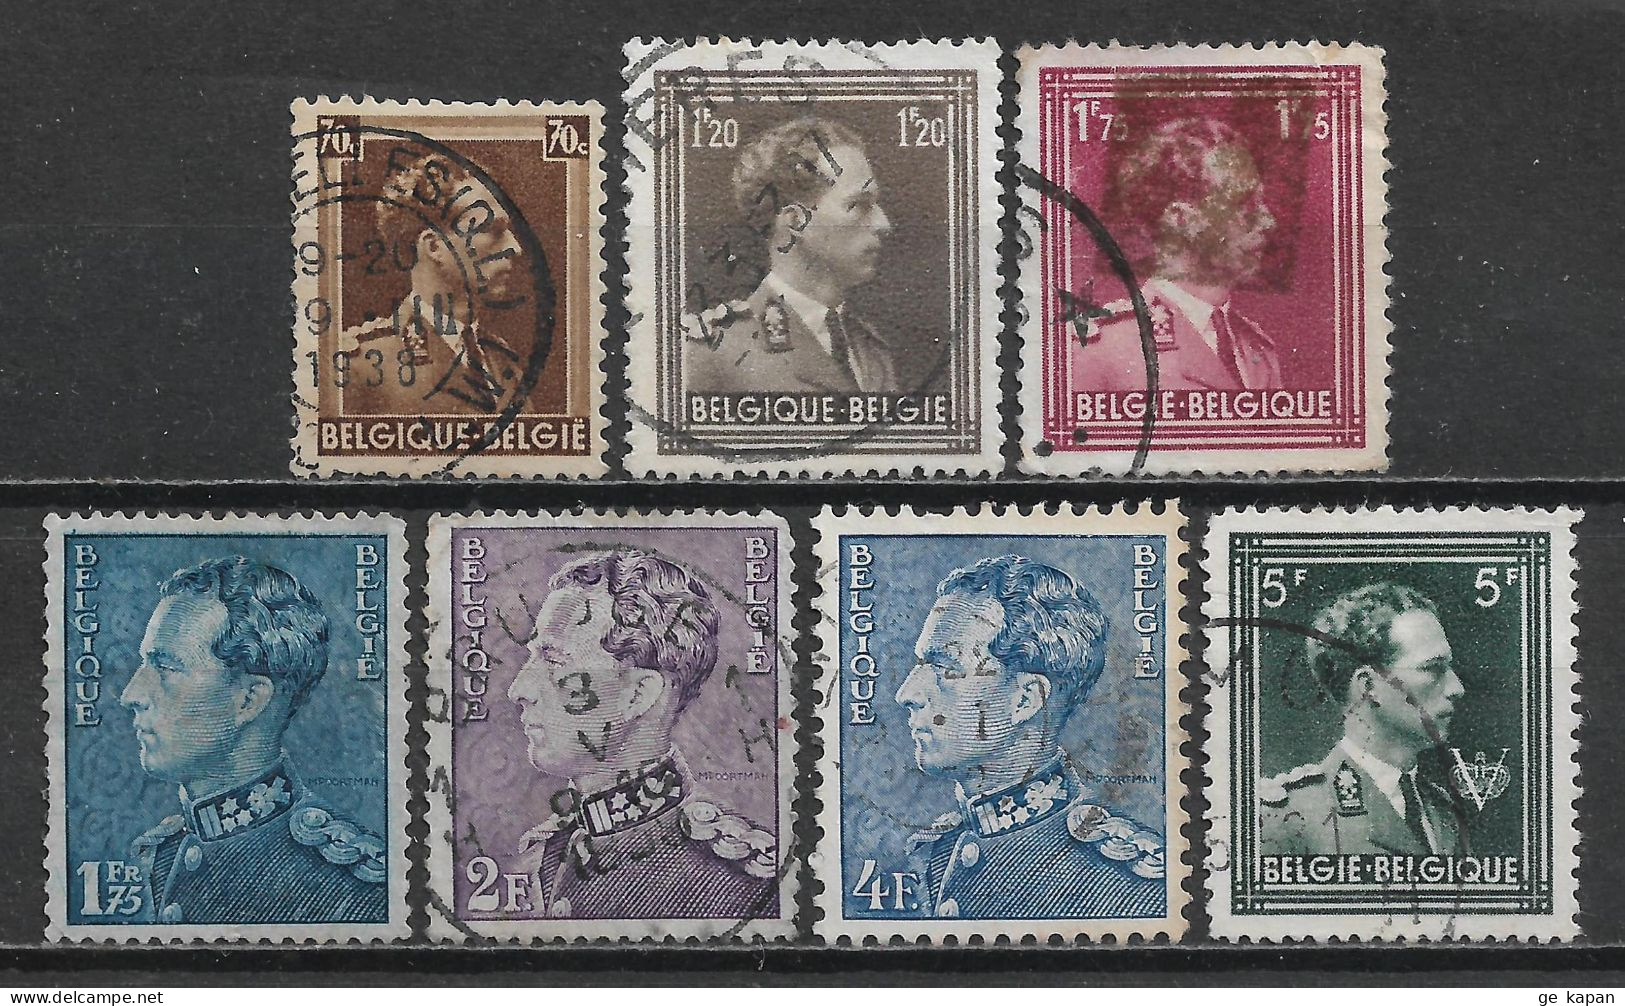 1936-1951 BELGIUM Set Of 7 USED STAMPS (Scott # 283,285,288,295,296,305,352) CV $6.30 - 1936-51 Poortman